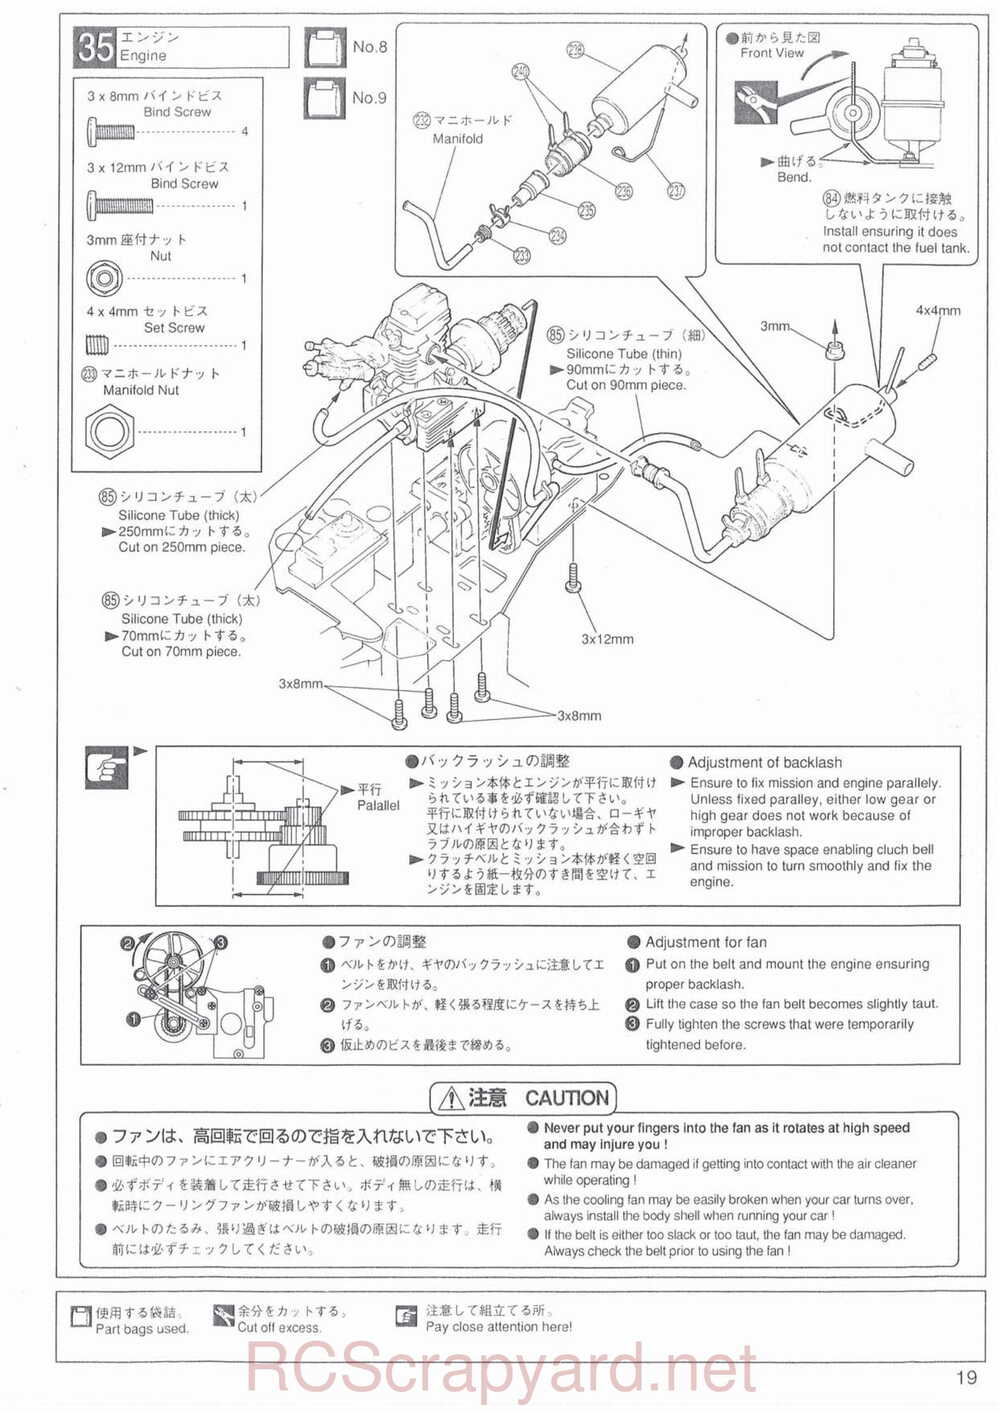 Kyosho - 31701 - Superten-Four FW-03 - Manual - Page 19